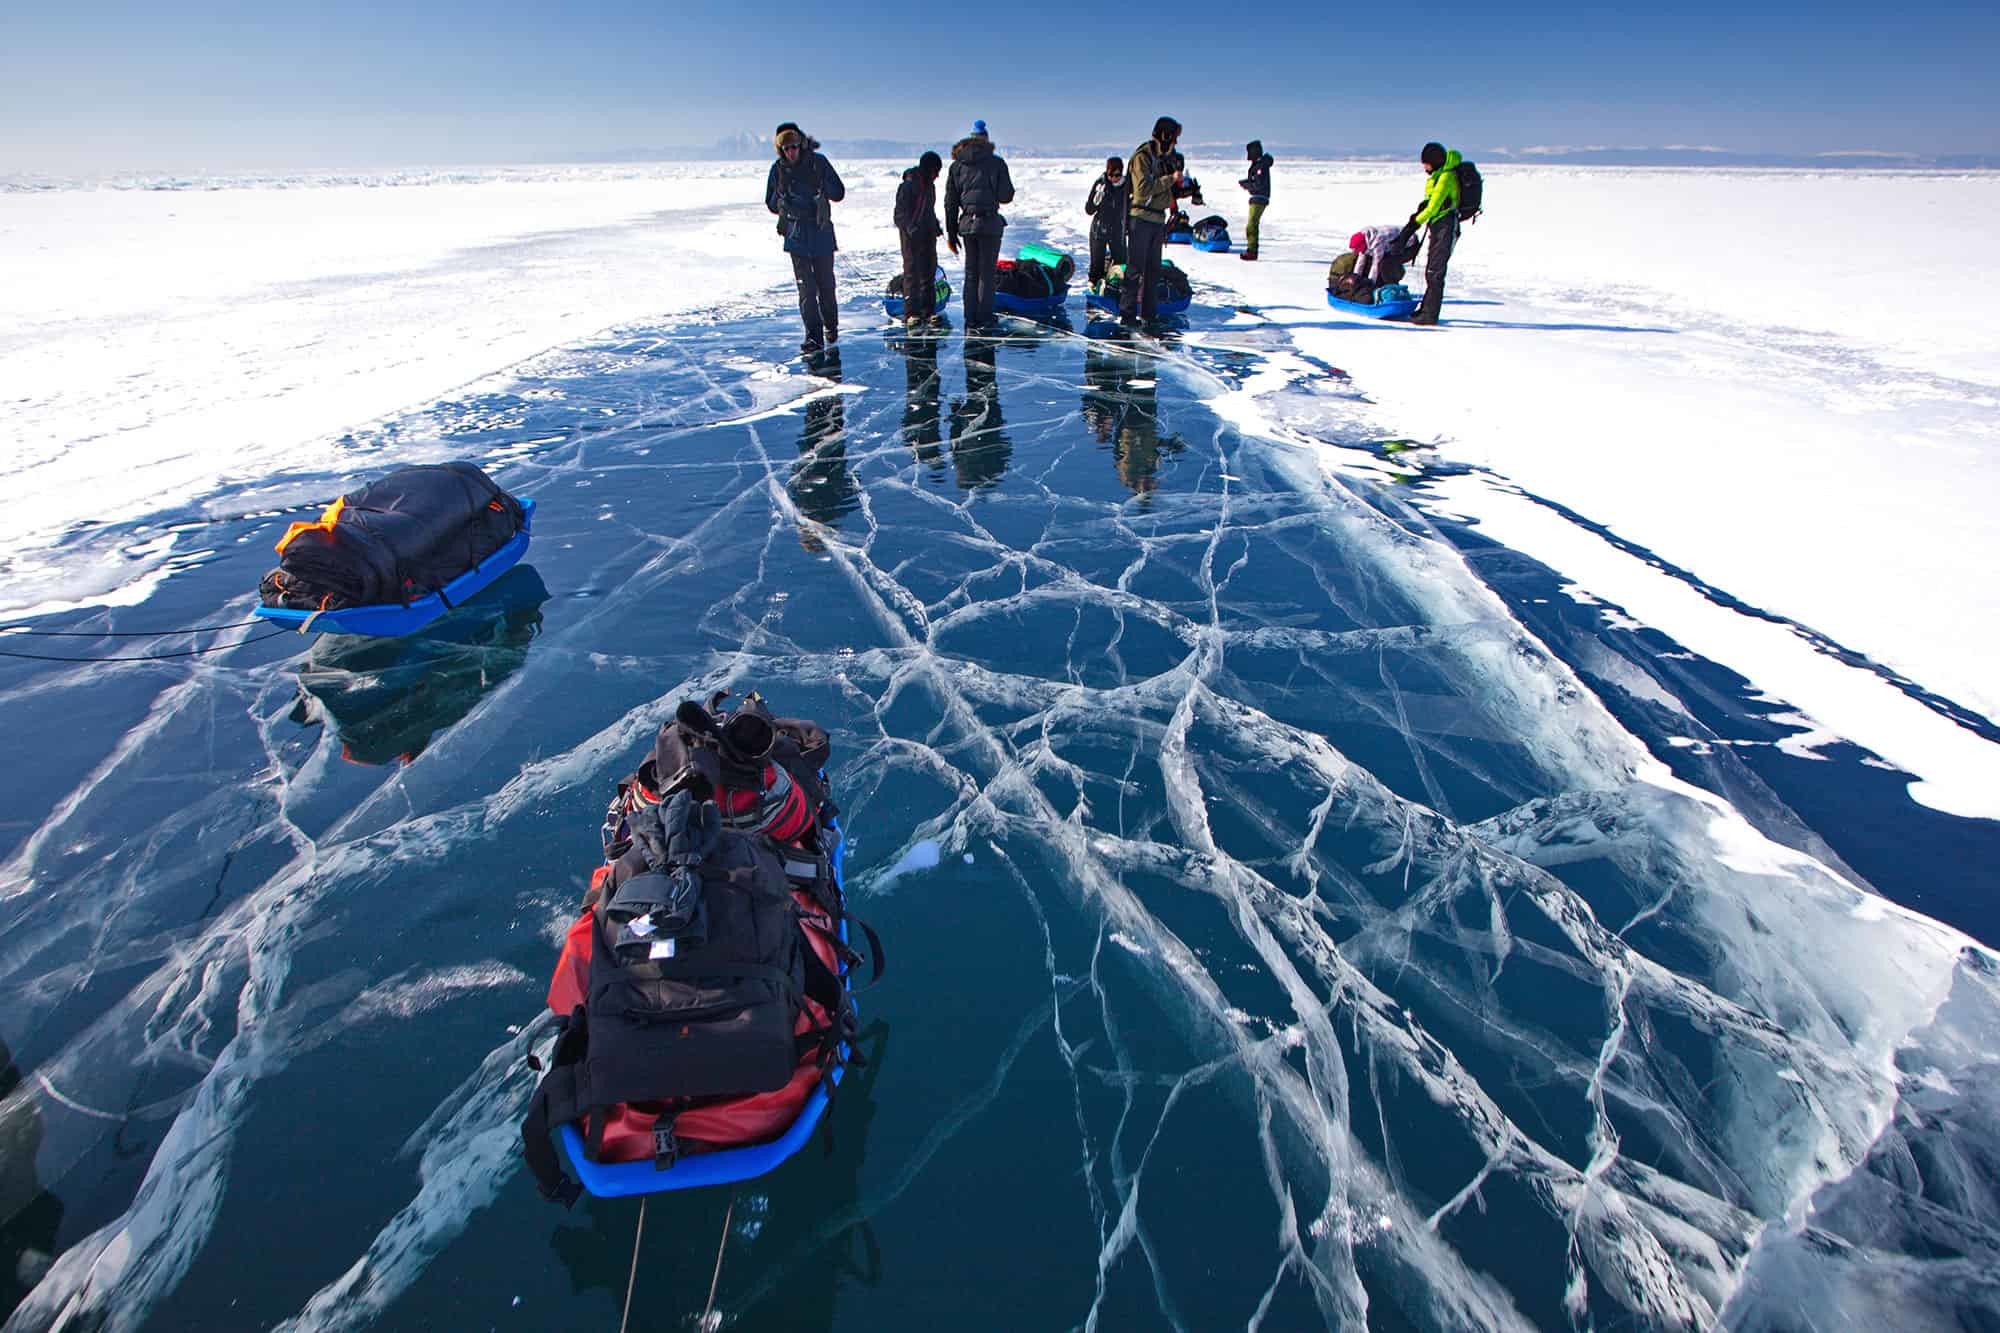 Озеро байкал экскурсии. Озеро Байкал туризм. Зимний туризм на Байкале. Озеро Байкал туризм зимой. Байкал экскурсии зимой.